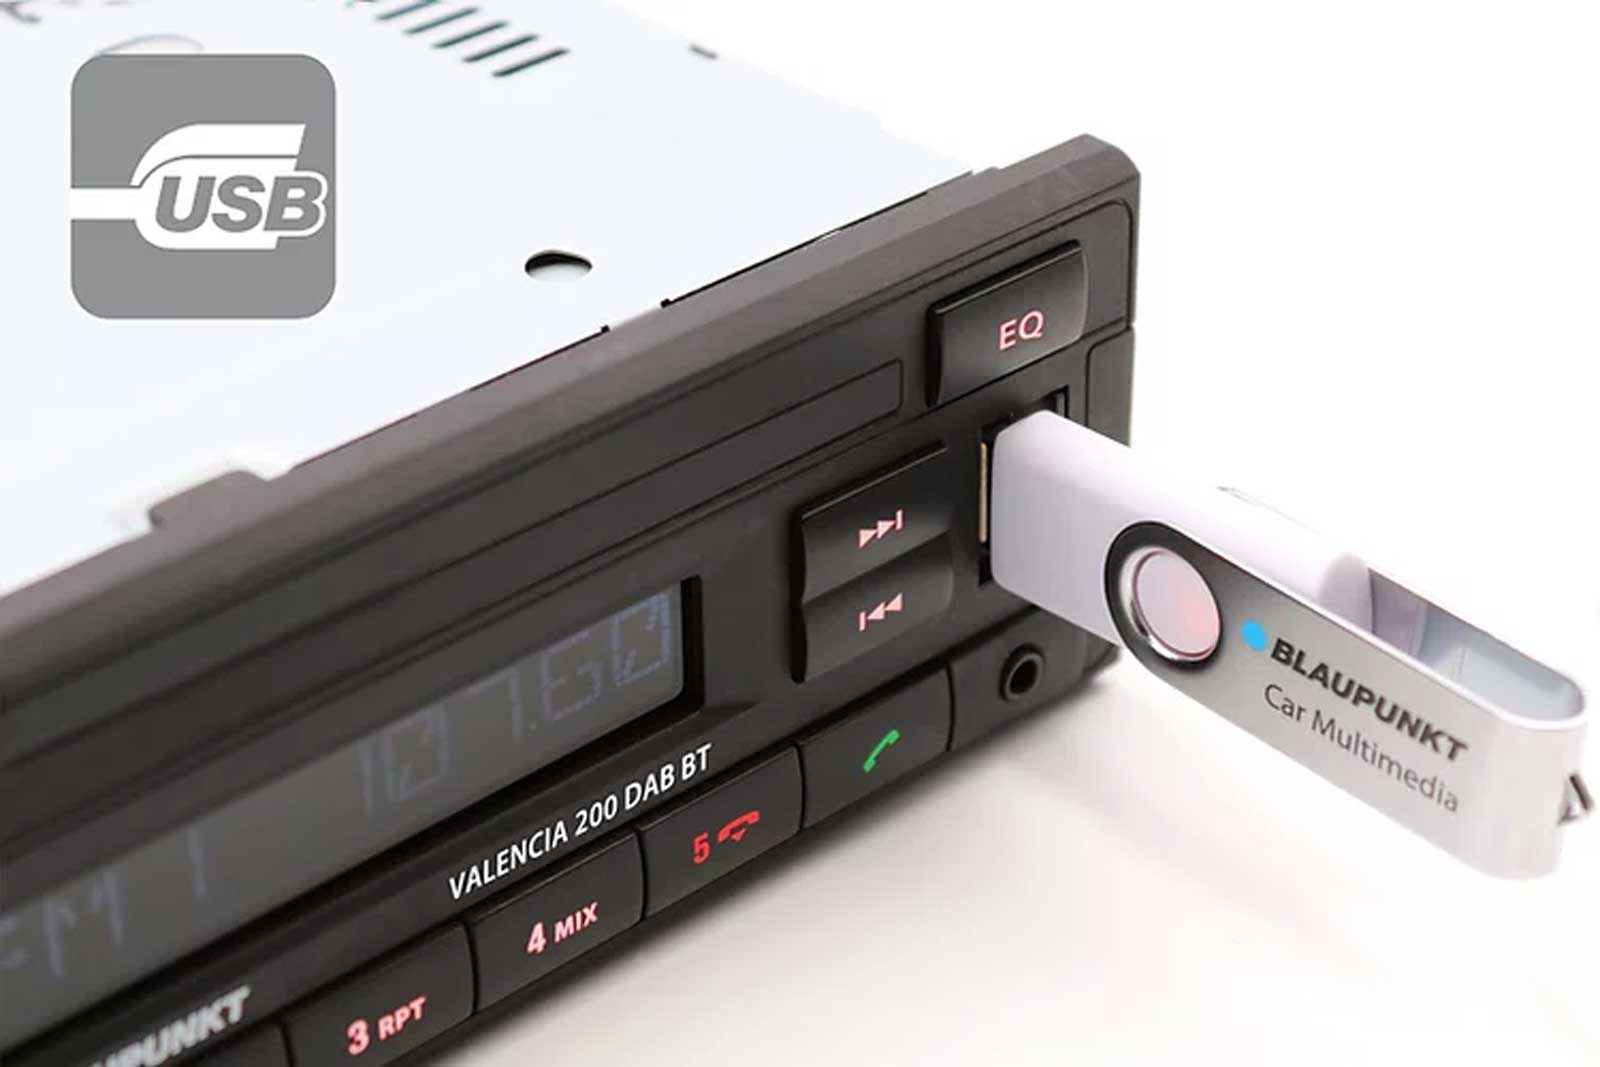 Continental 12V DAB+ Radio RDS USB MP3 WMA Bluetooth Beleuchtung